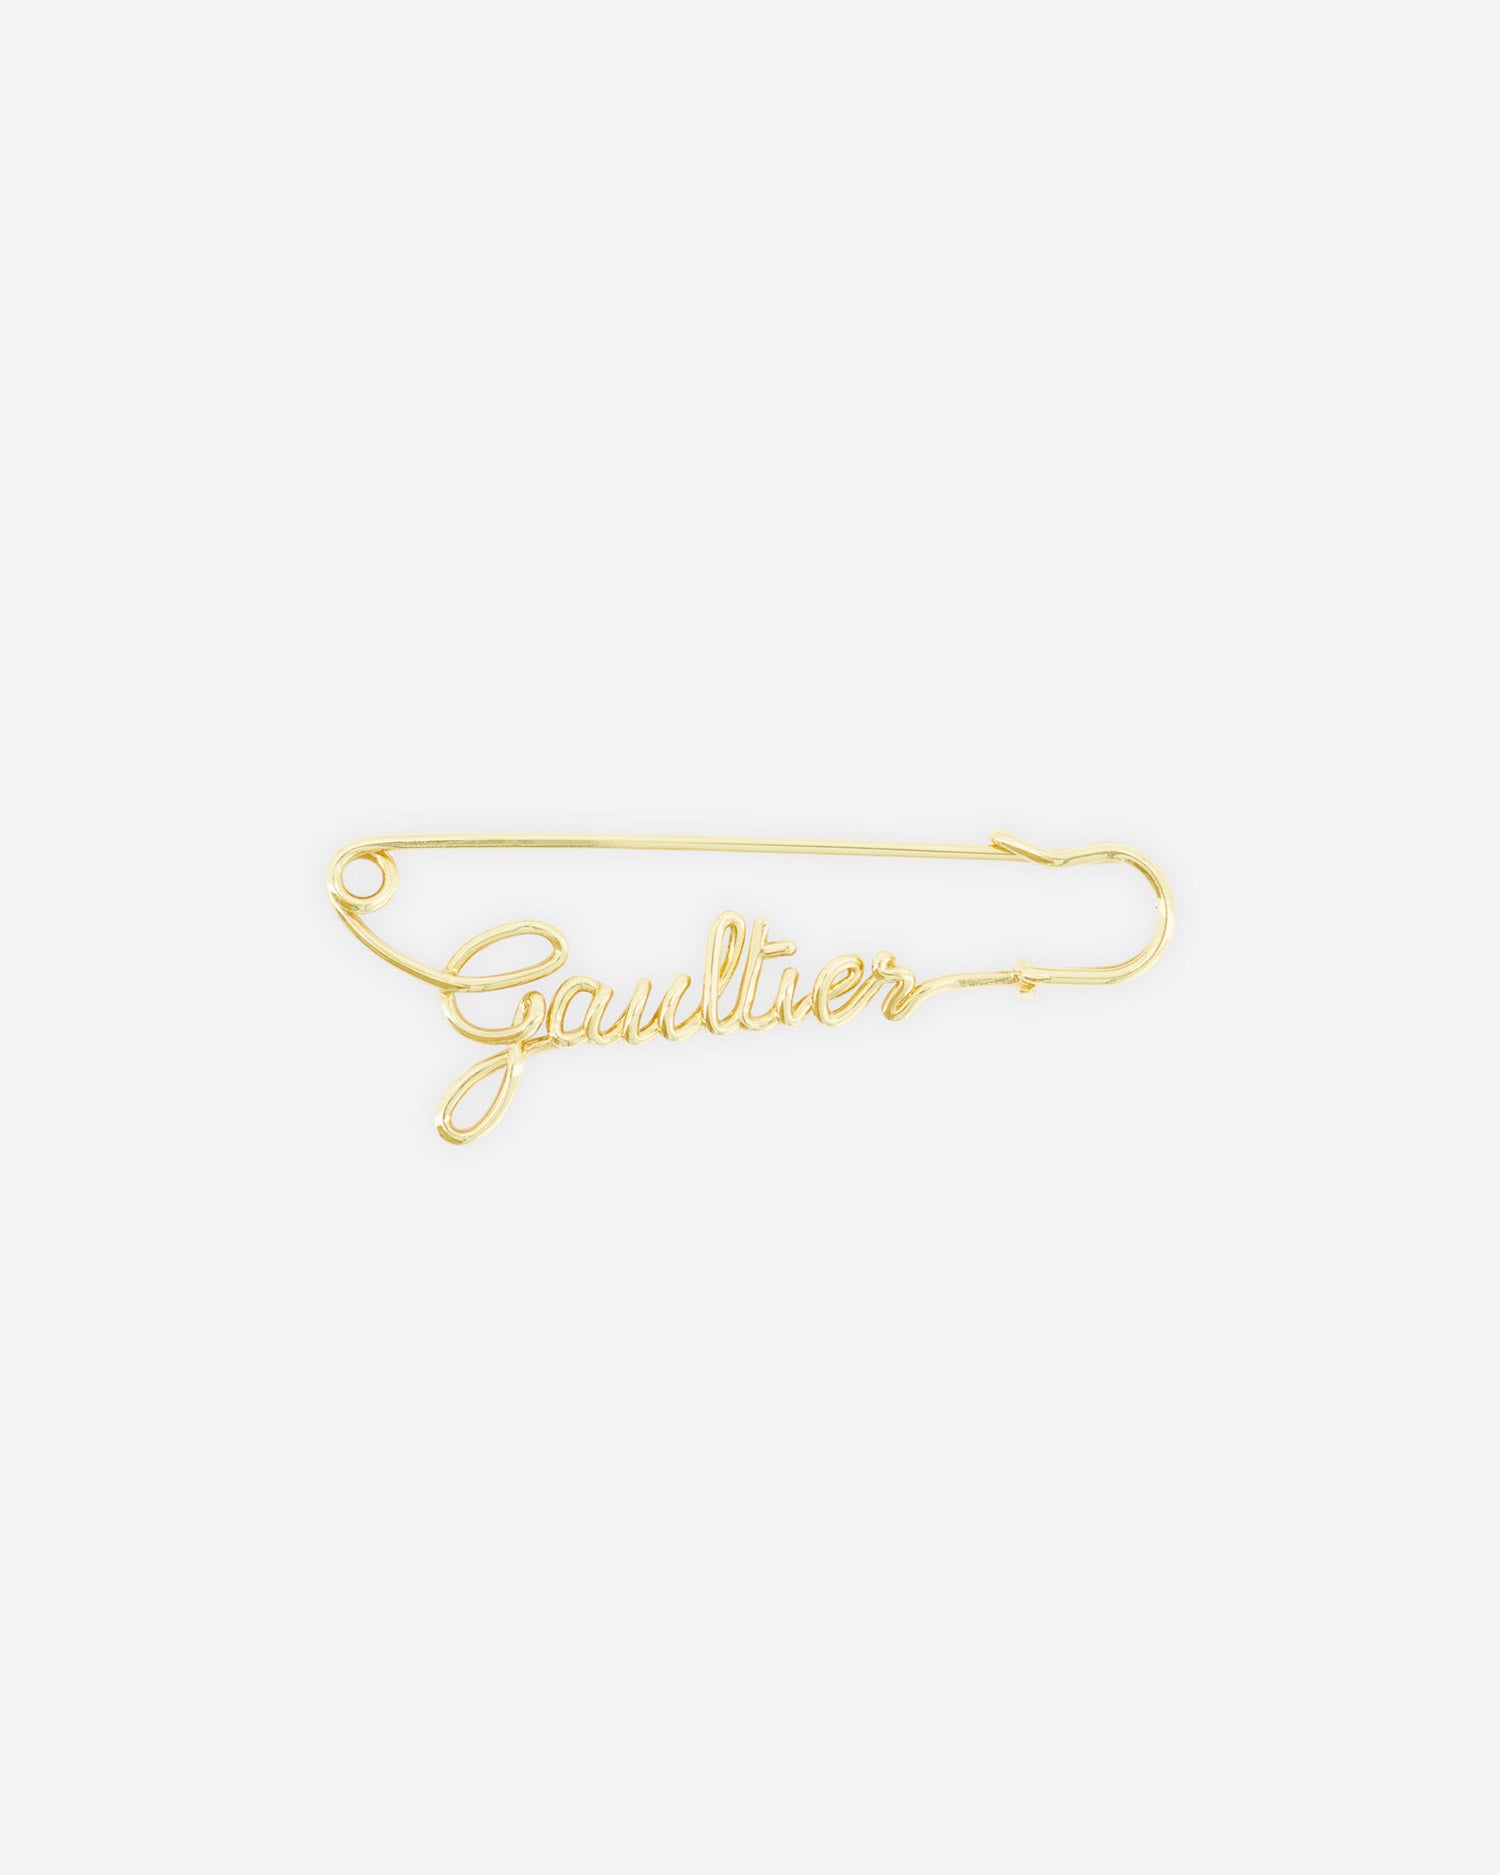 Gaultier Safety Pin - Jewelry - Jean Paul Gaultier - Elevastor